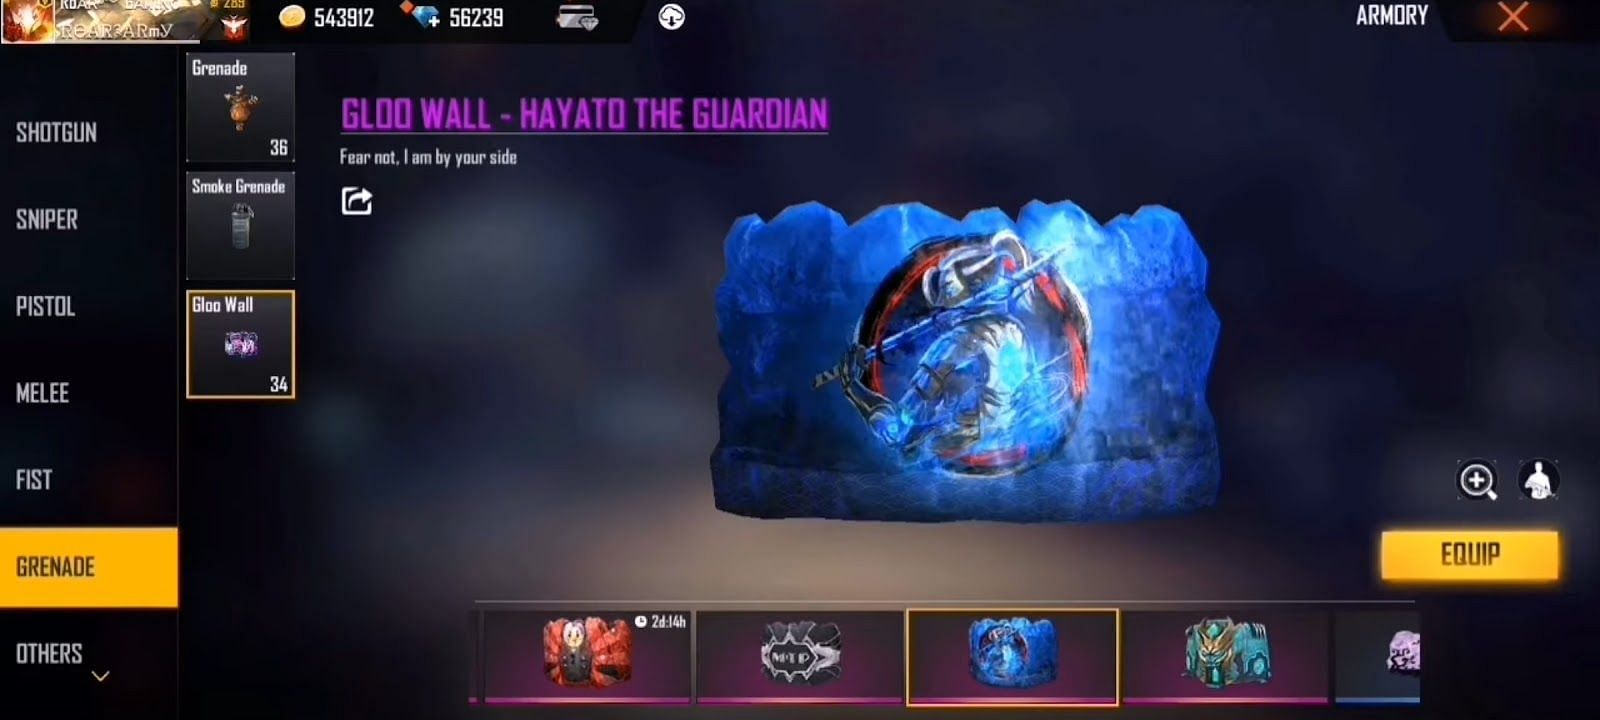 Hayato The Guardian in Free Fire (Image via YouTube/Roar Gaming)